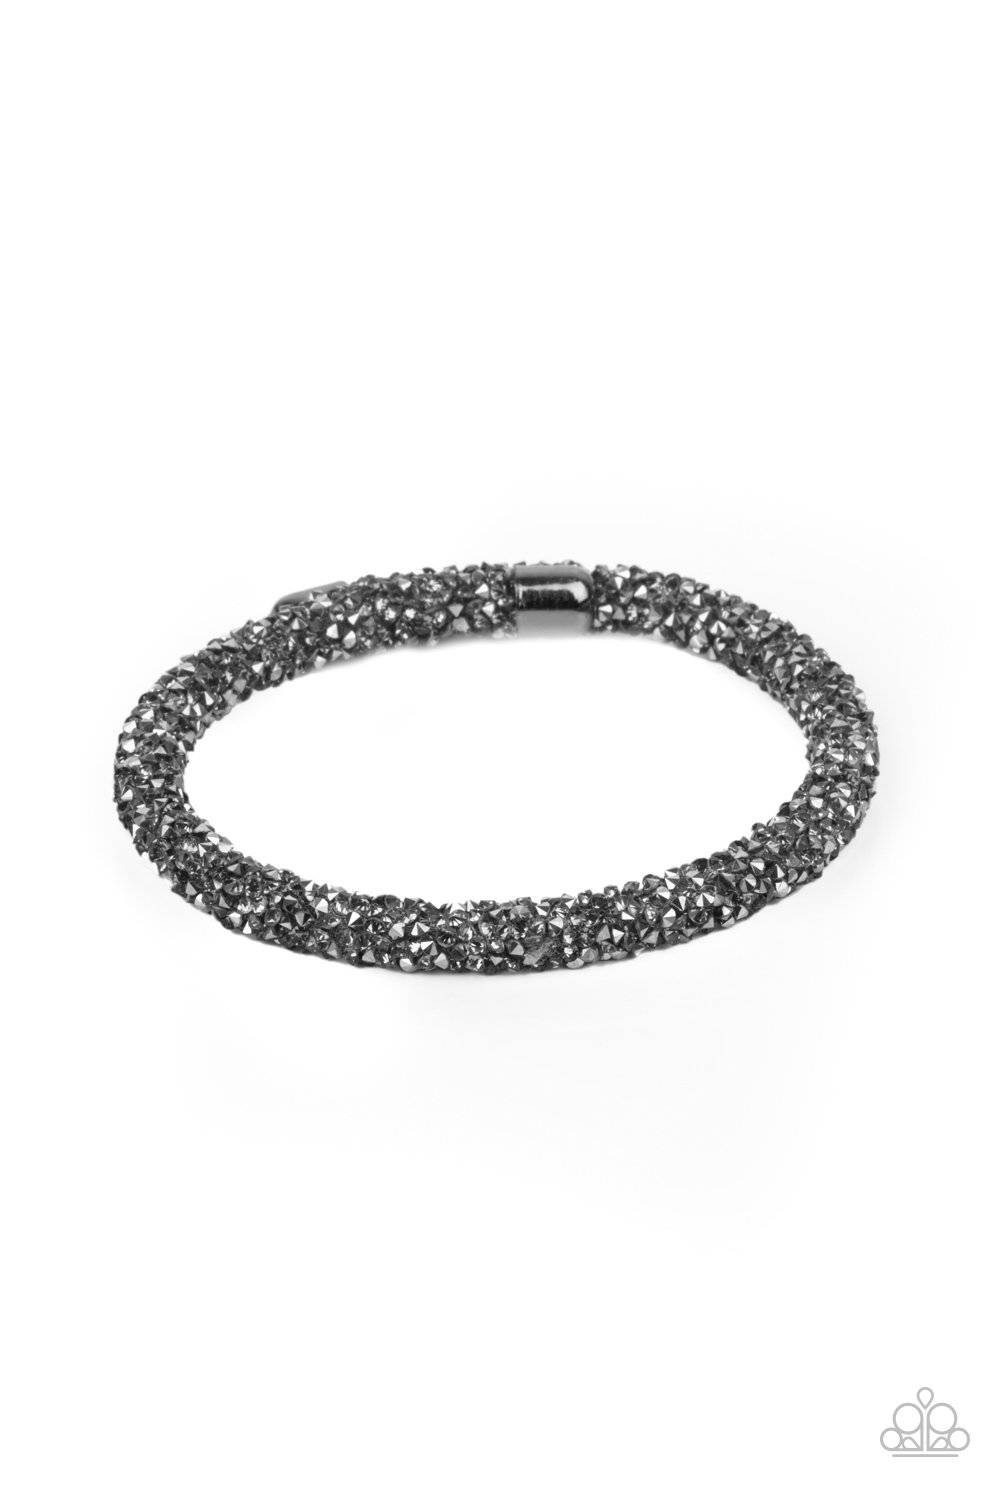 Roll Out The Glitz - Black Hematite Smoky Rhinestone Bracelet - Paparazzi Accessories - GlaMarous Titi Jewels